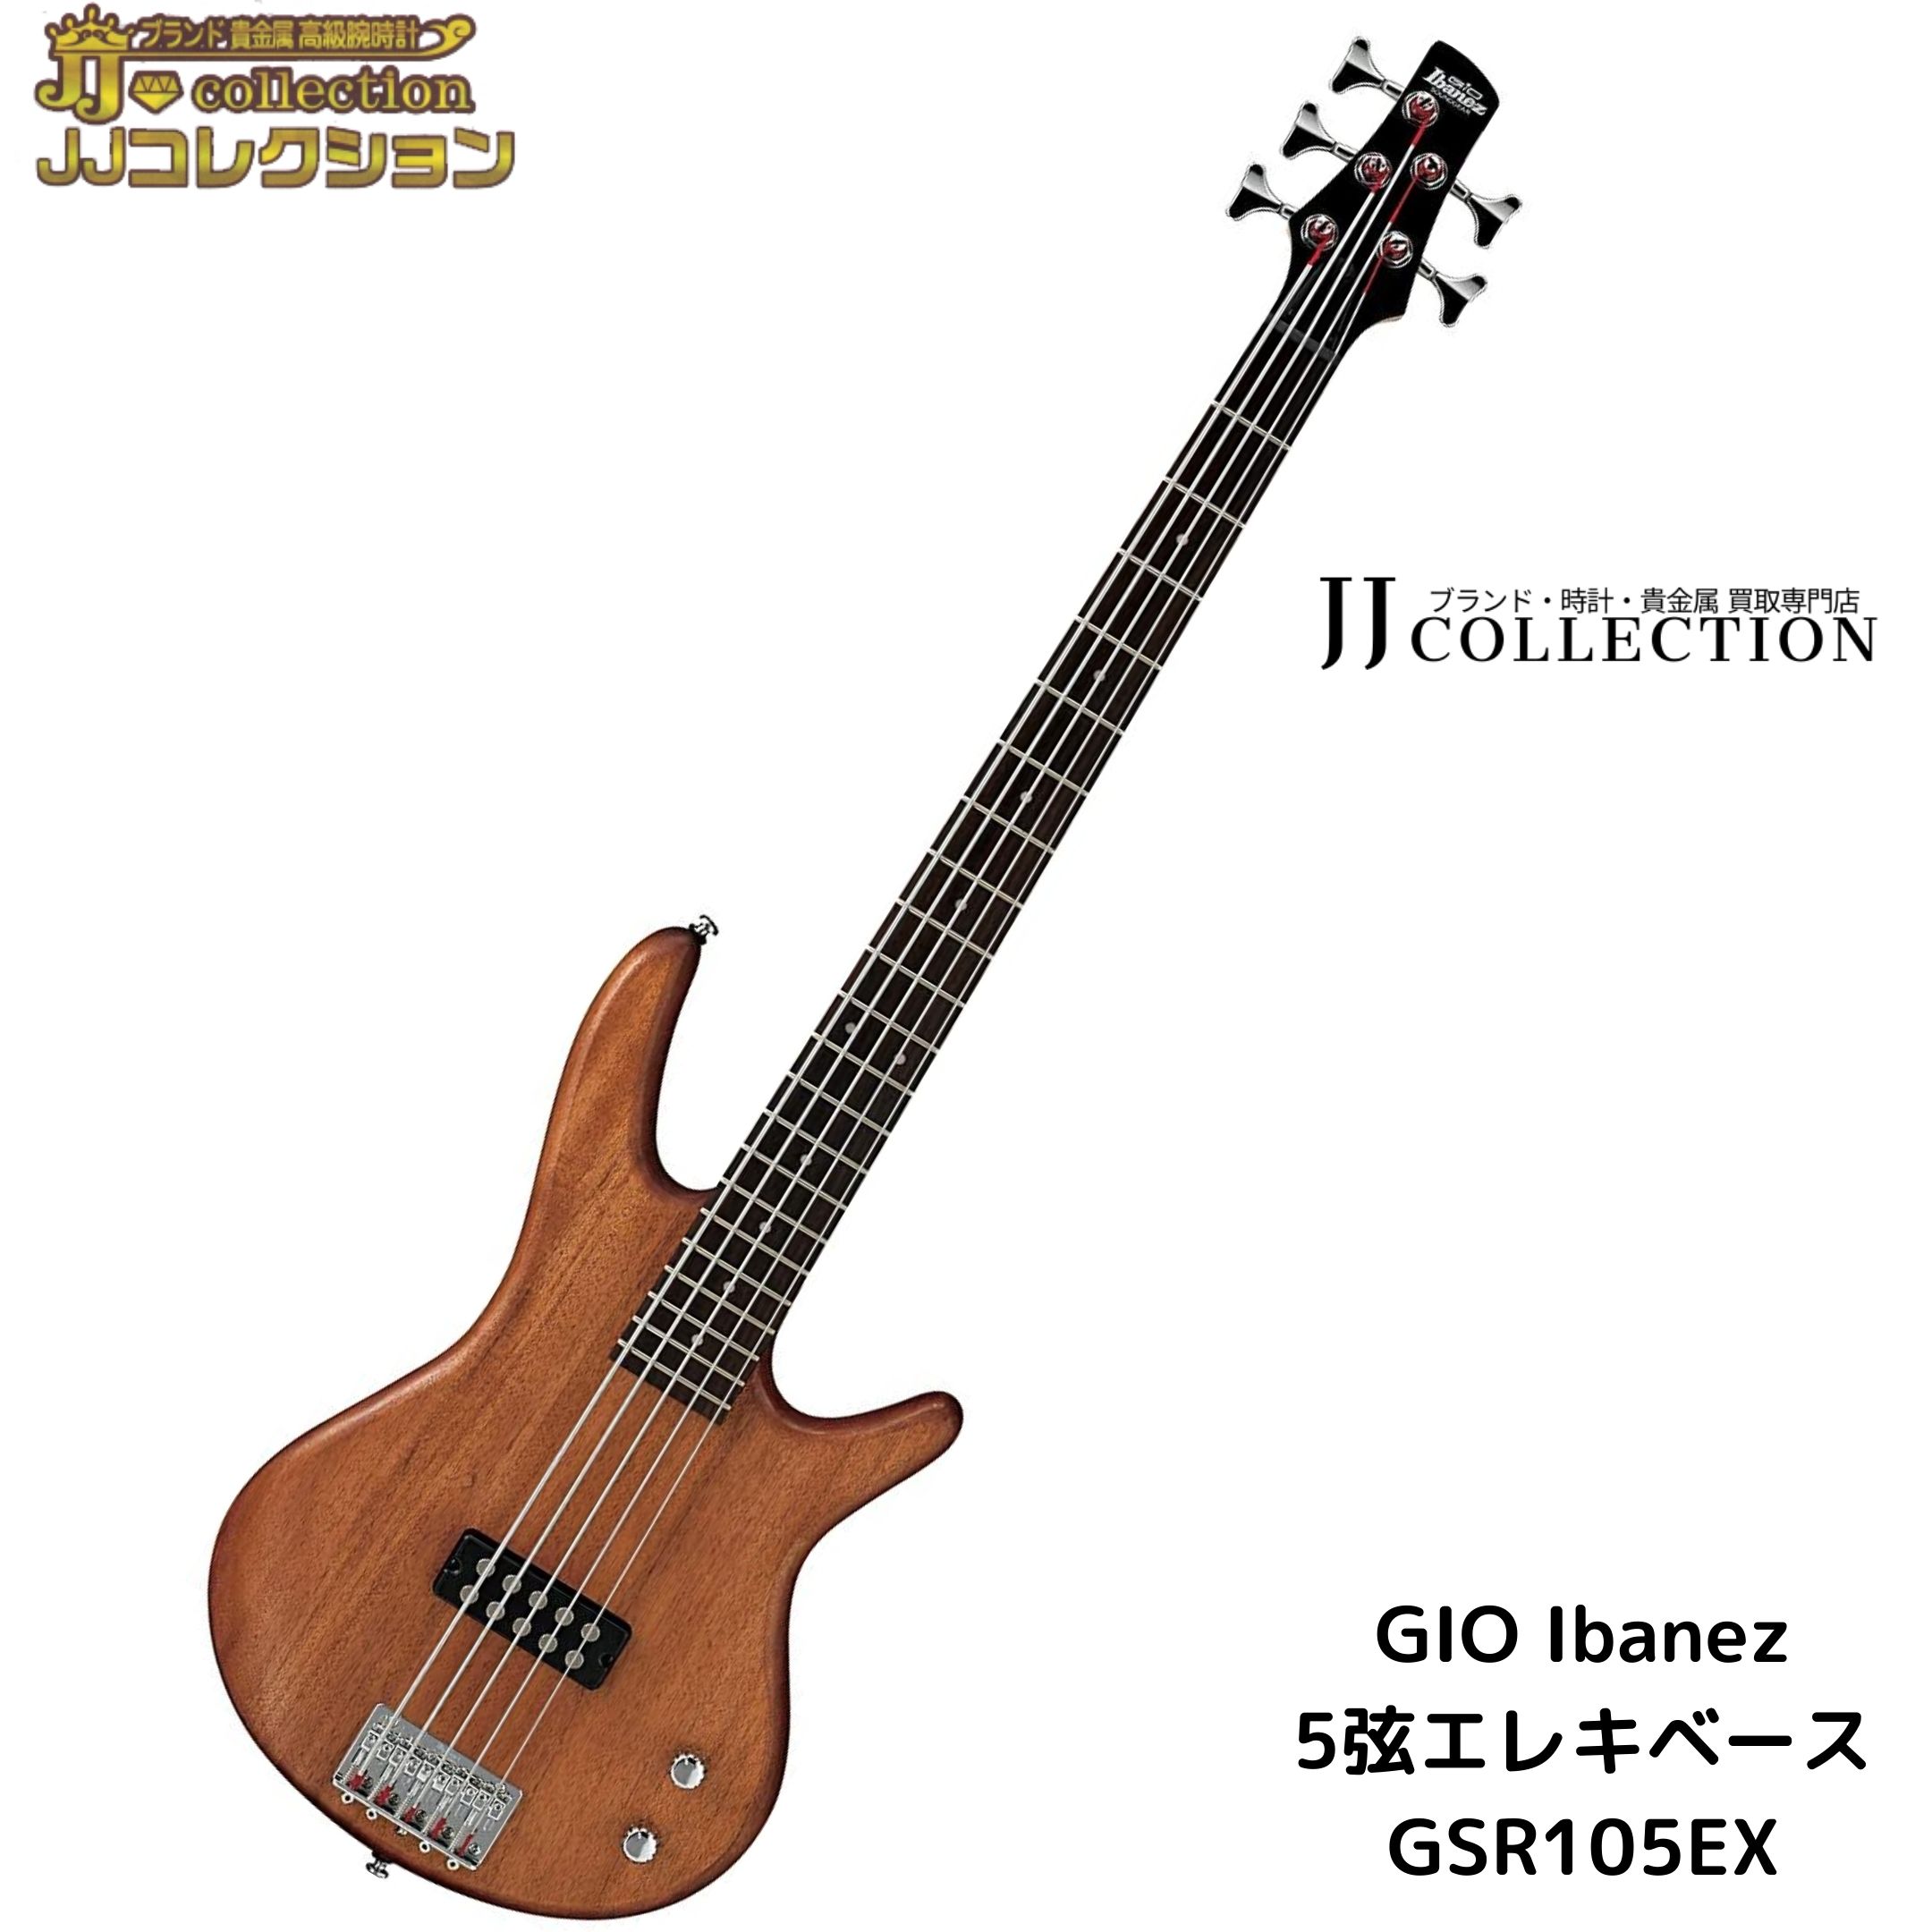 Gio Ibanez GSR105EX 5弦ベース